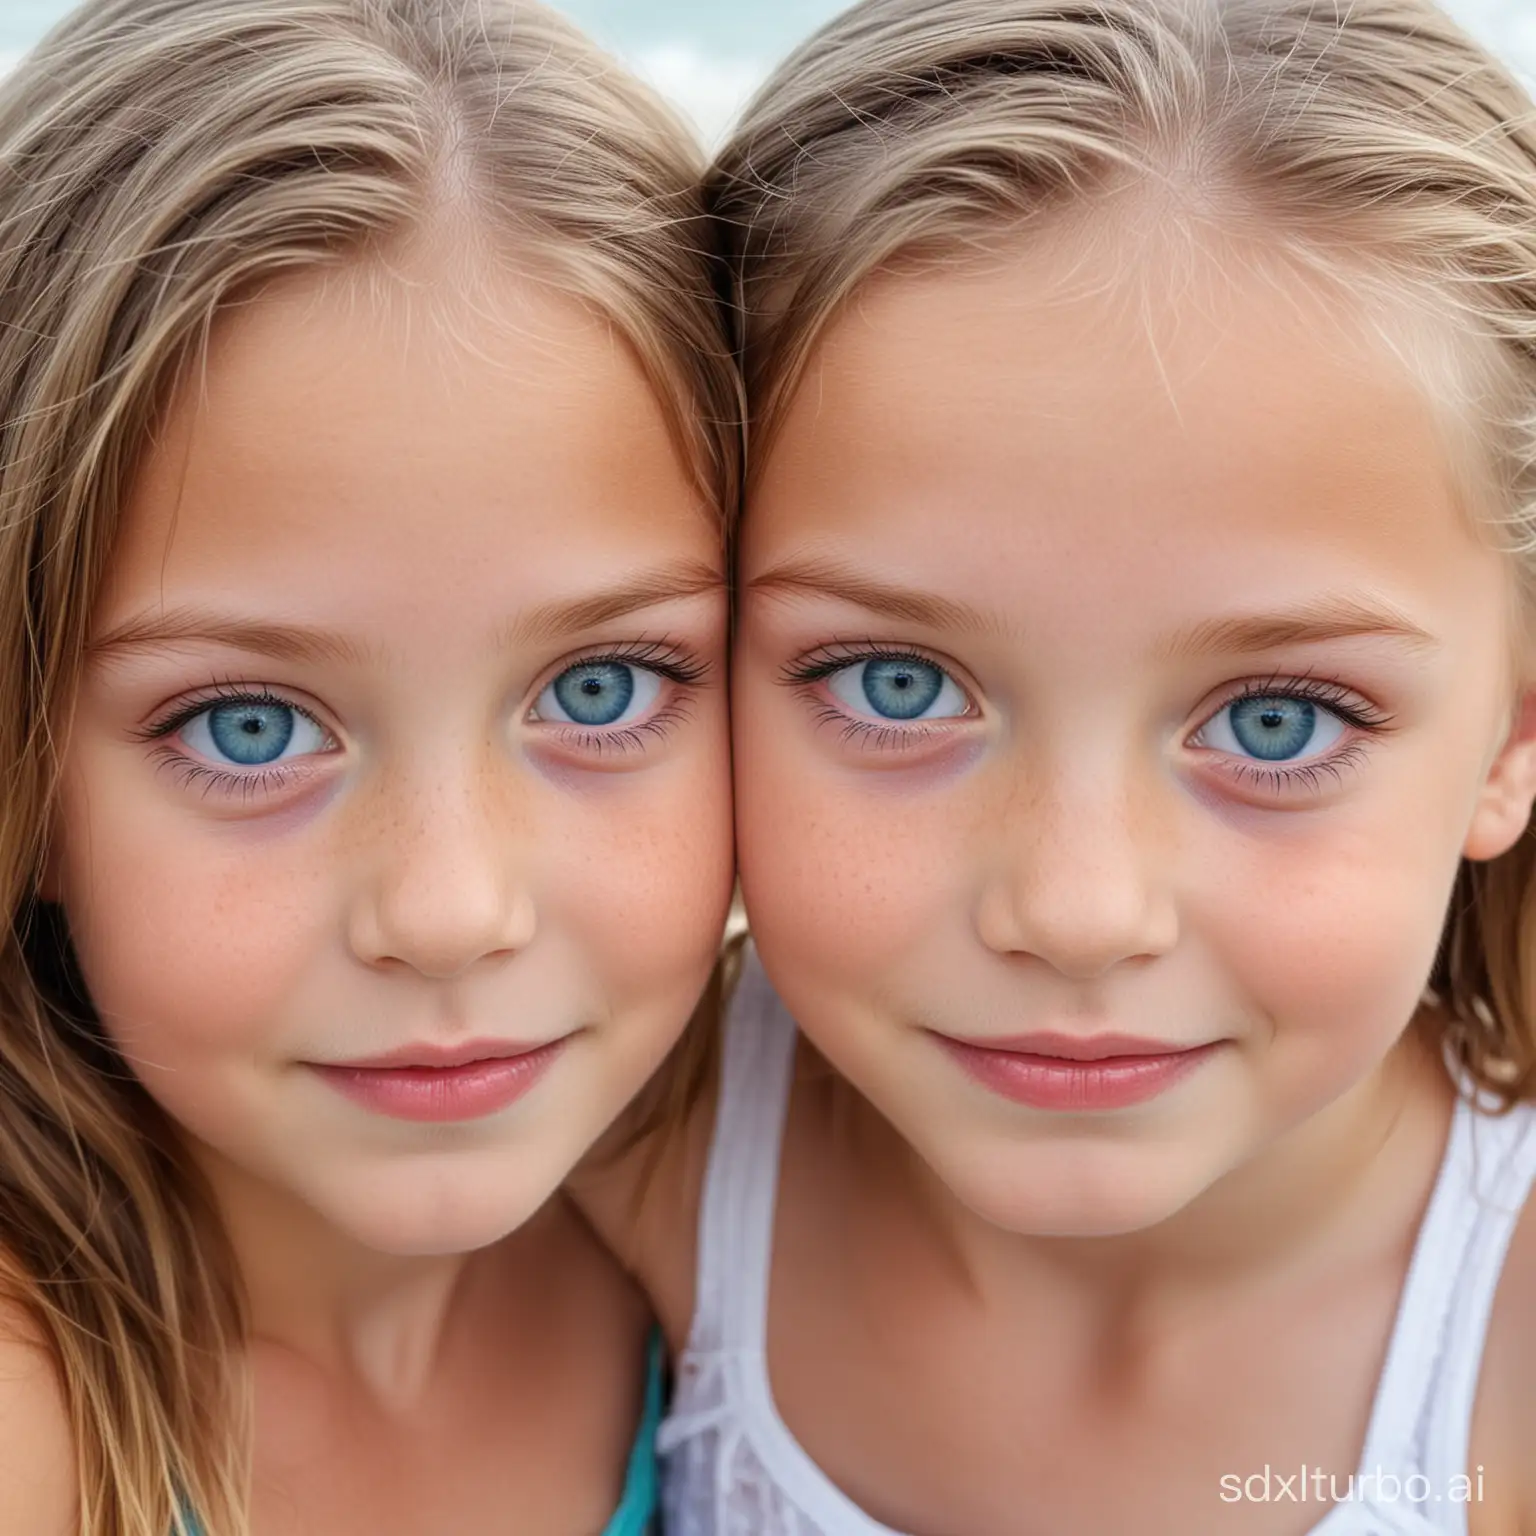 Young-Girls-with-Blue-Eyes-Enjoying-Beach-Day-Fun